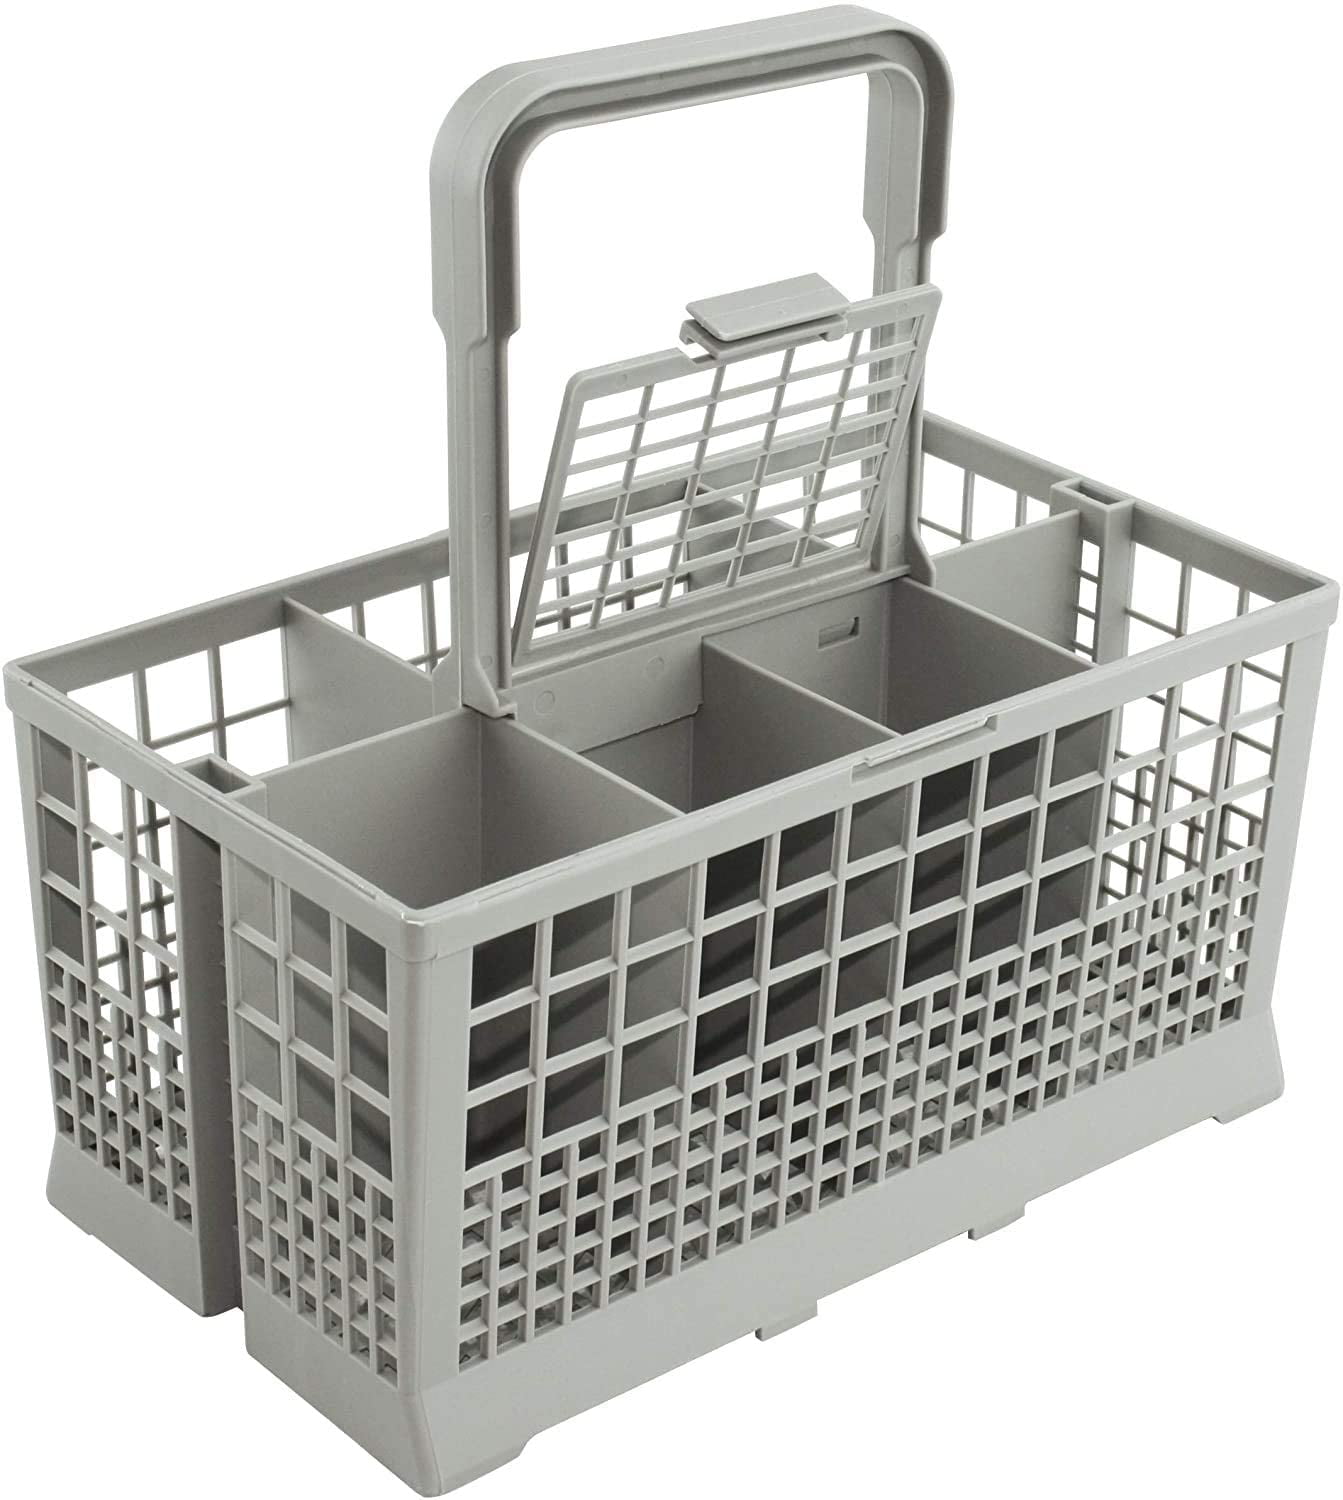 Details about   Dishwasher Silverware Basket Universal Cutlery fits Whirlpool Maytag KitchenAid 